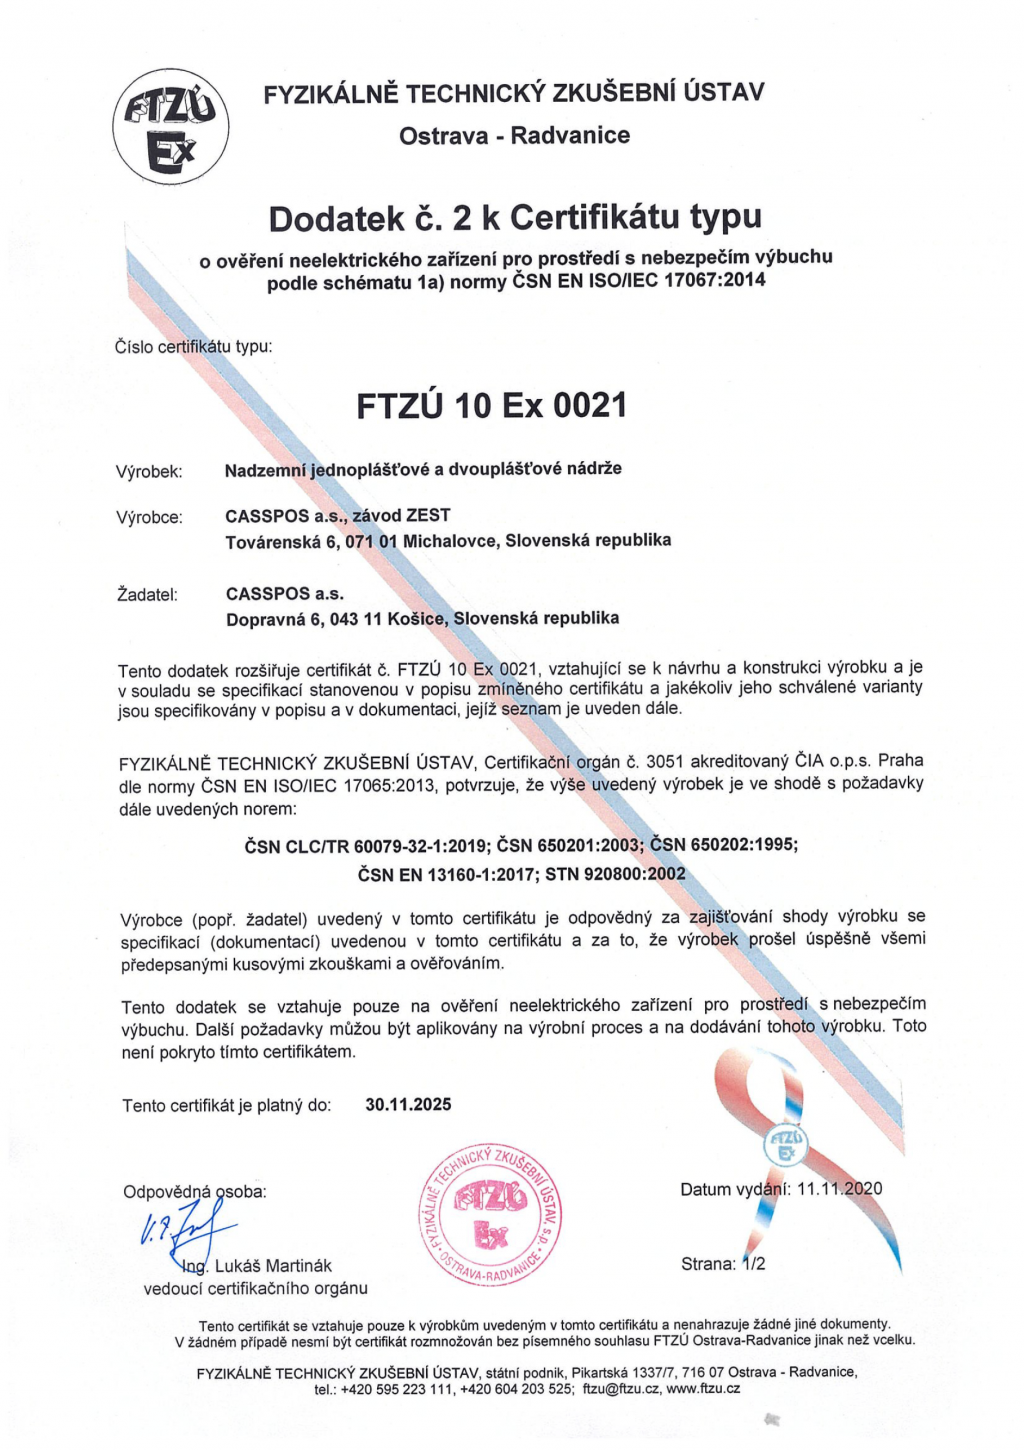 Certifikát FTZÚ 10 Ex 0021 dodatok č. 2 (2025)